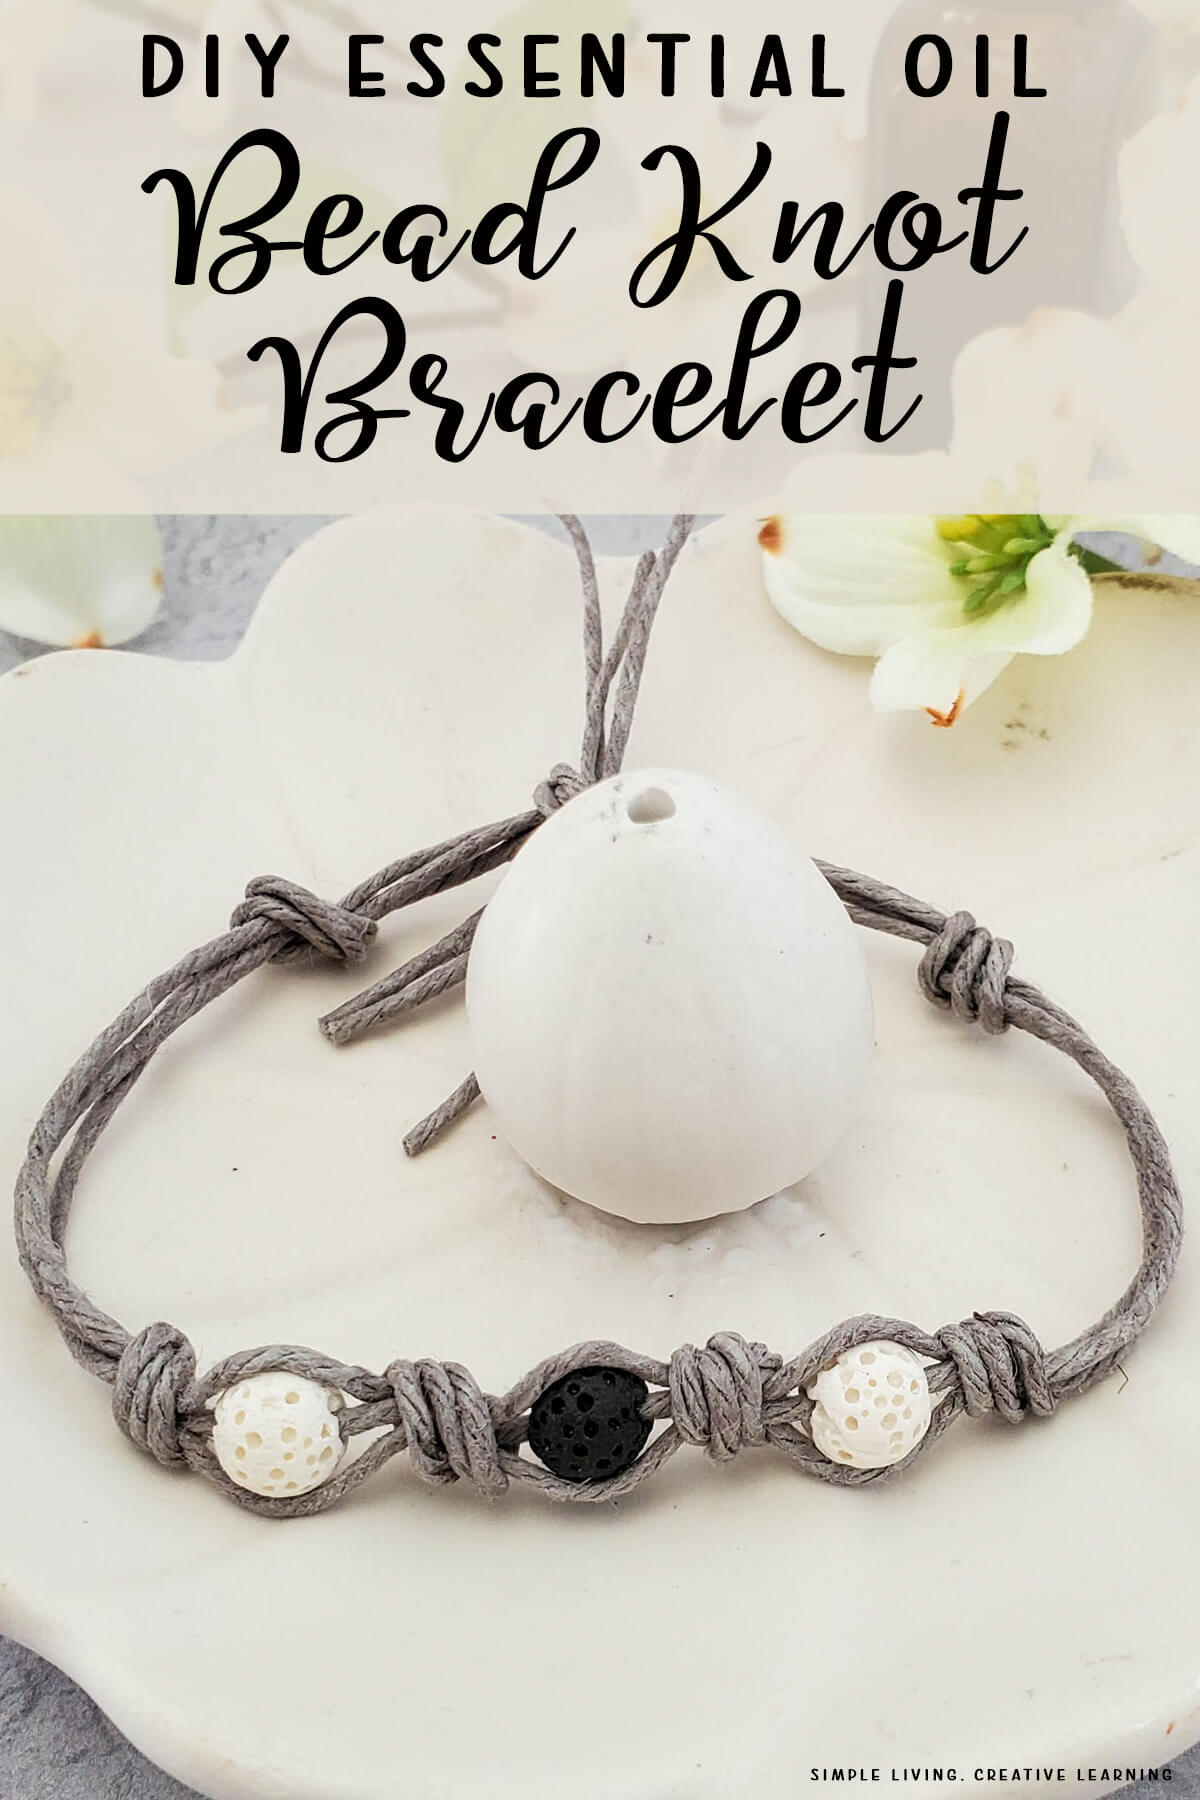 DIY Essential Oil Bead Knot Bracelet